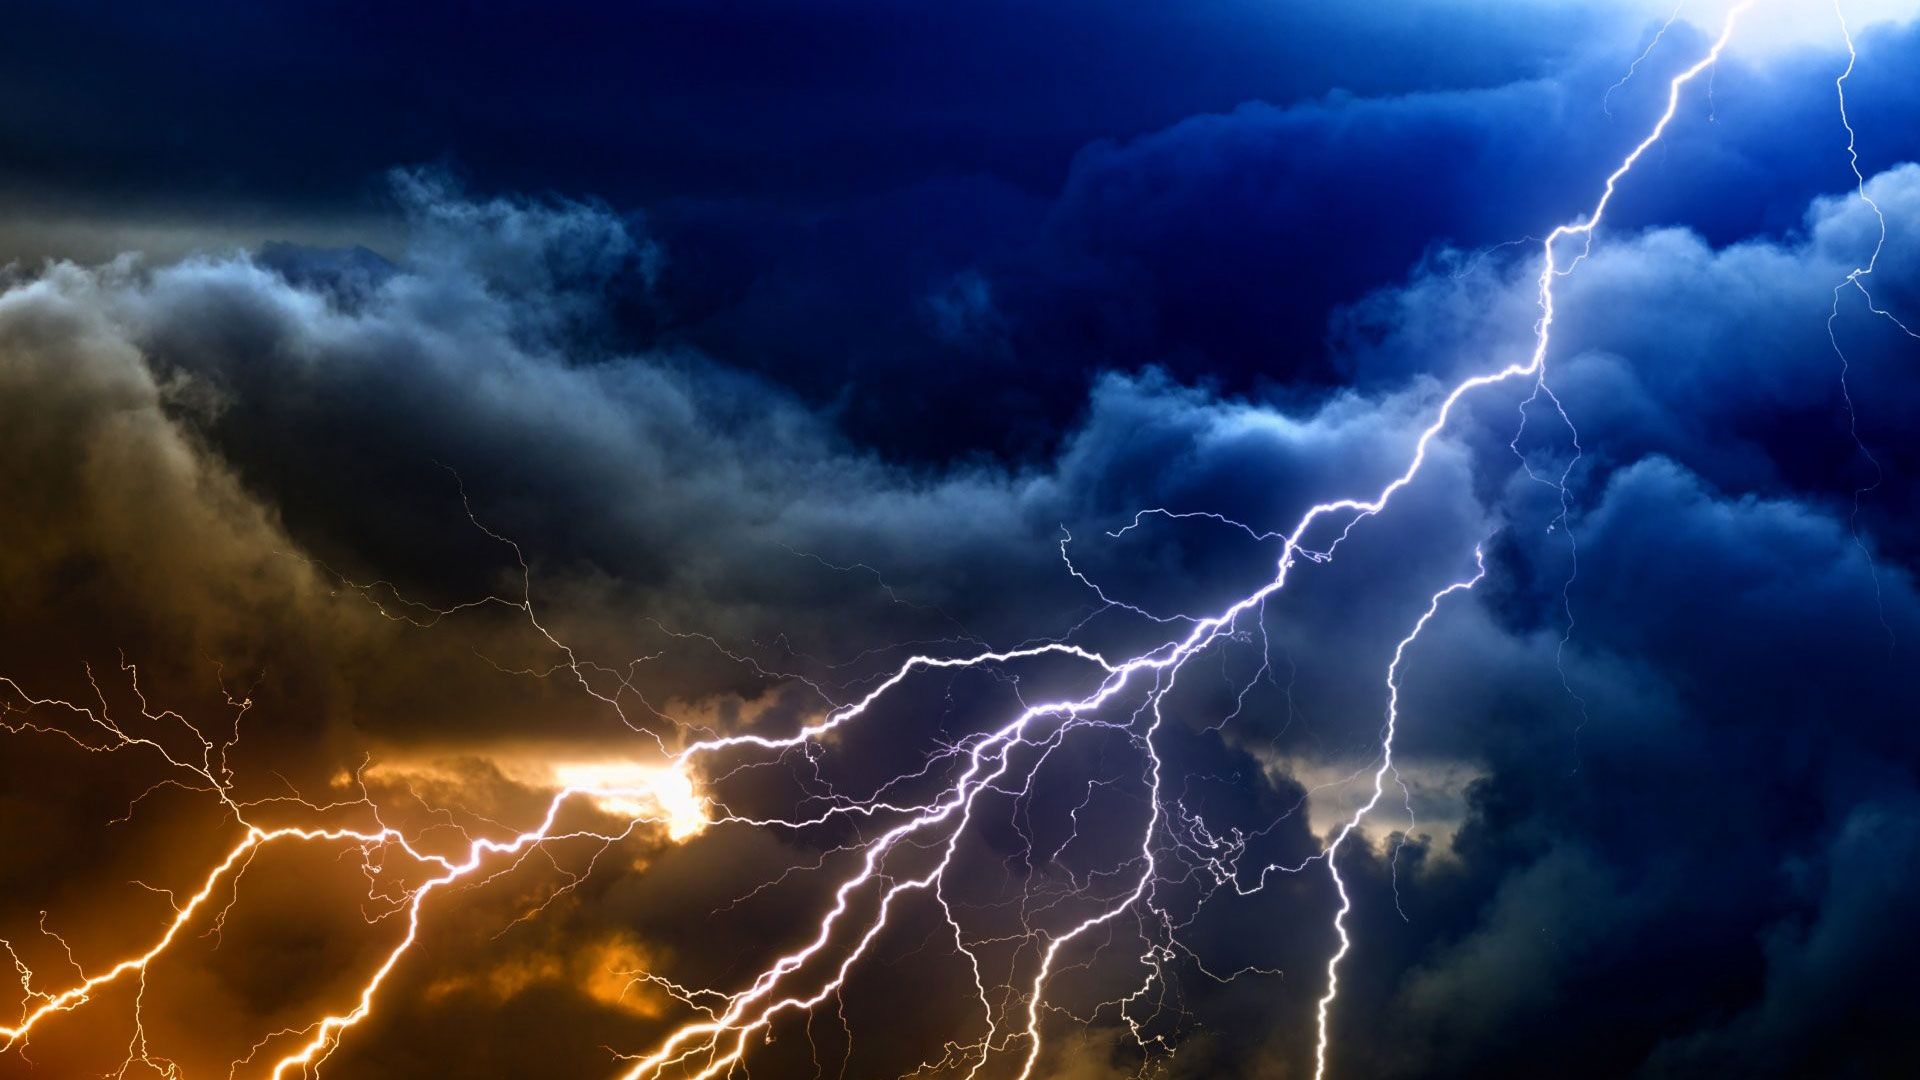 Stormy Sky With Lightning Bolts